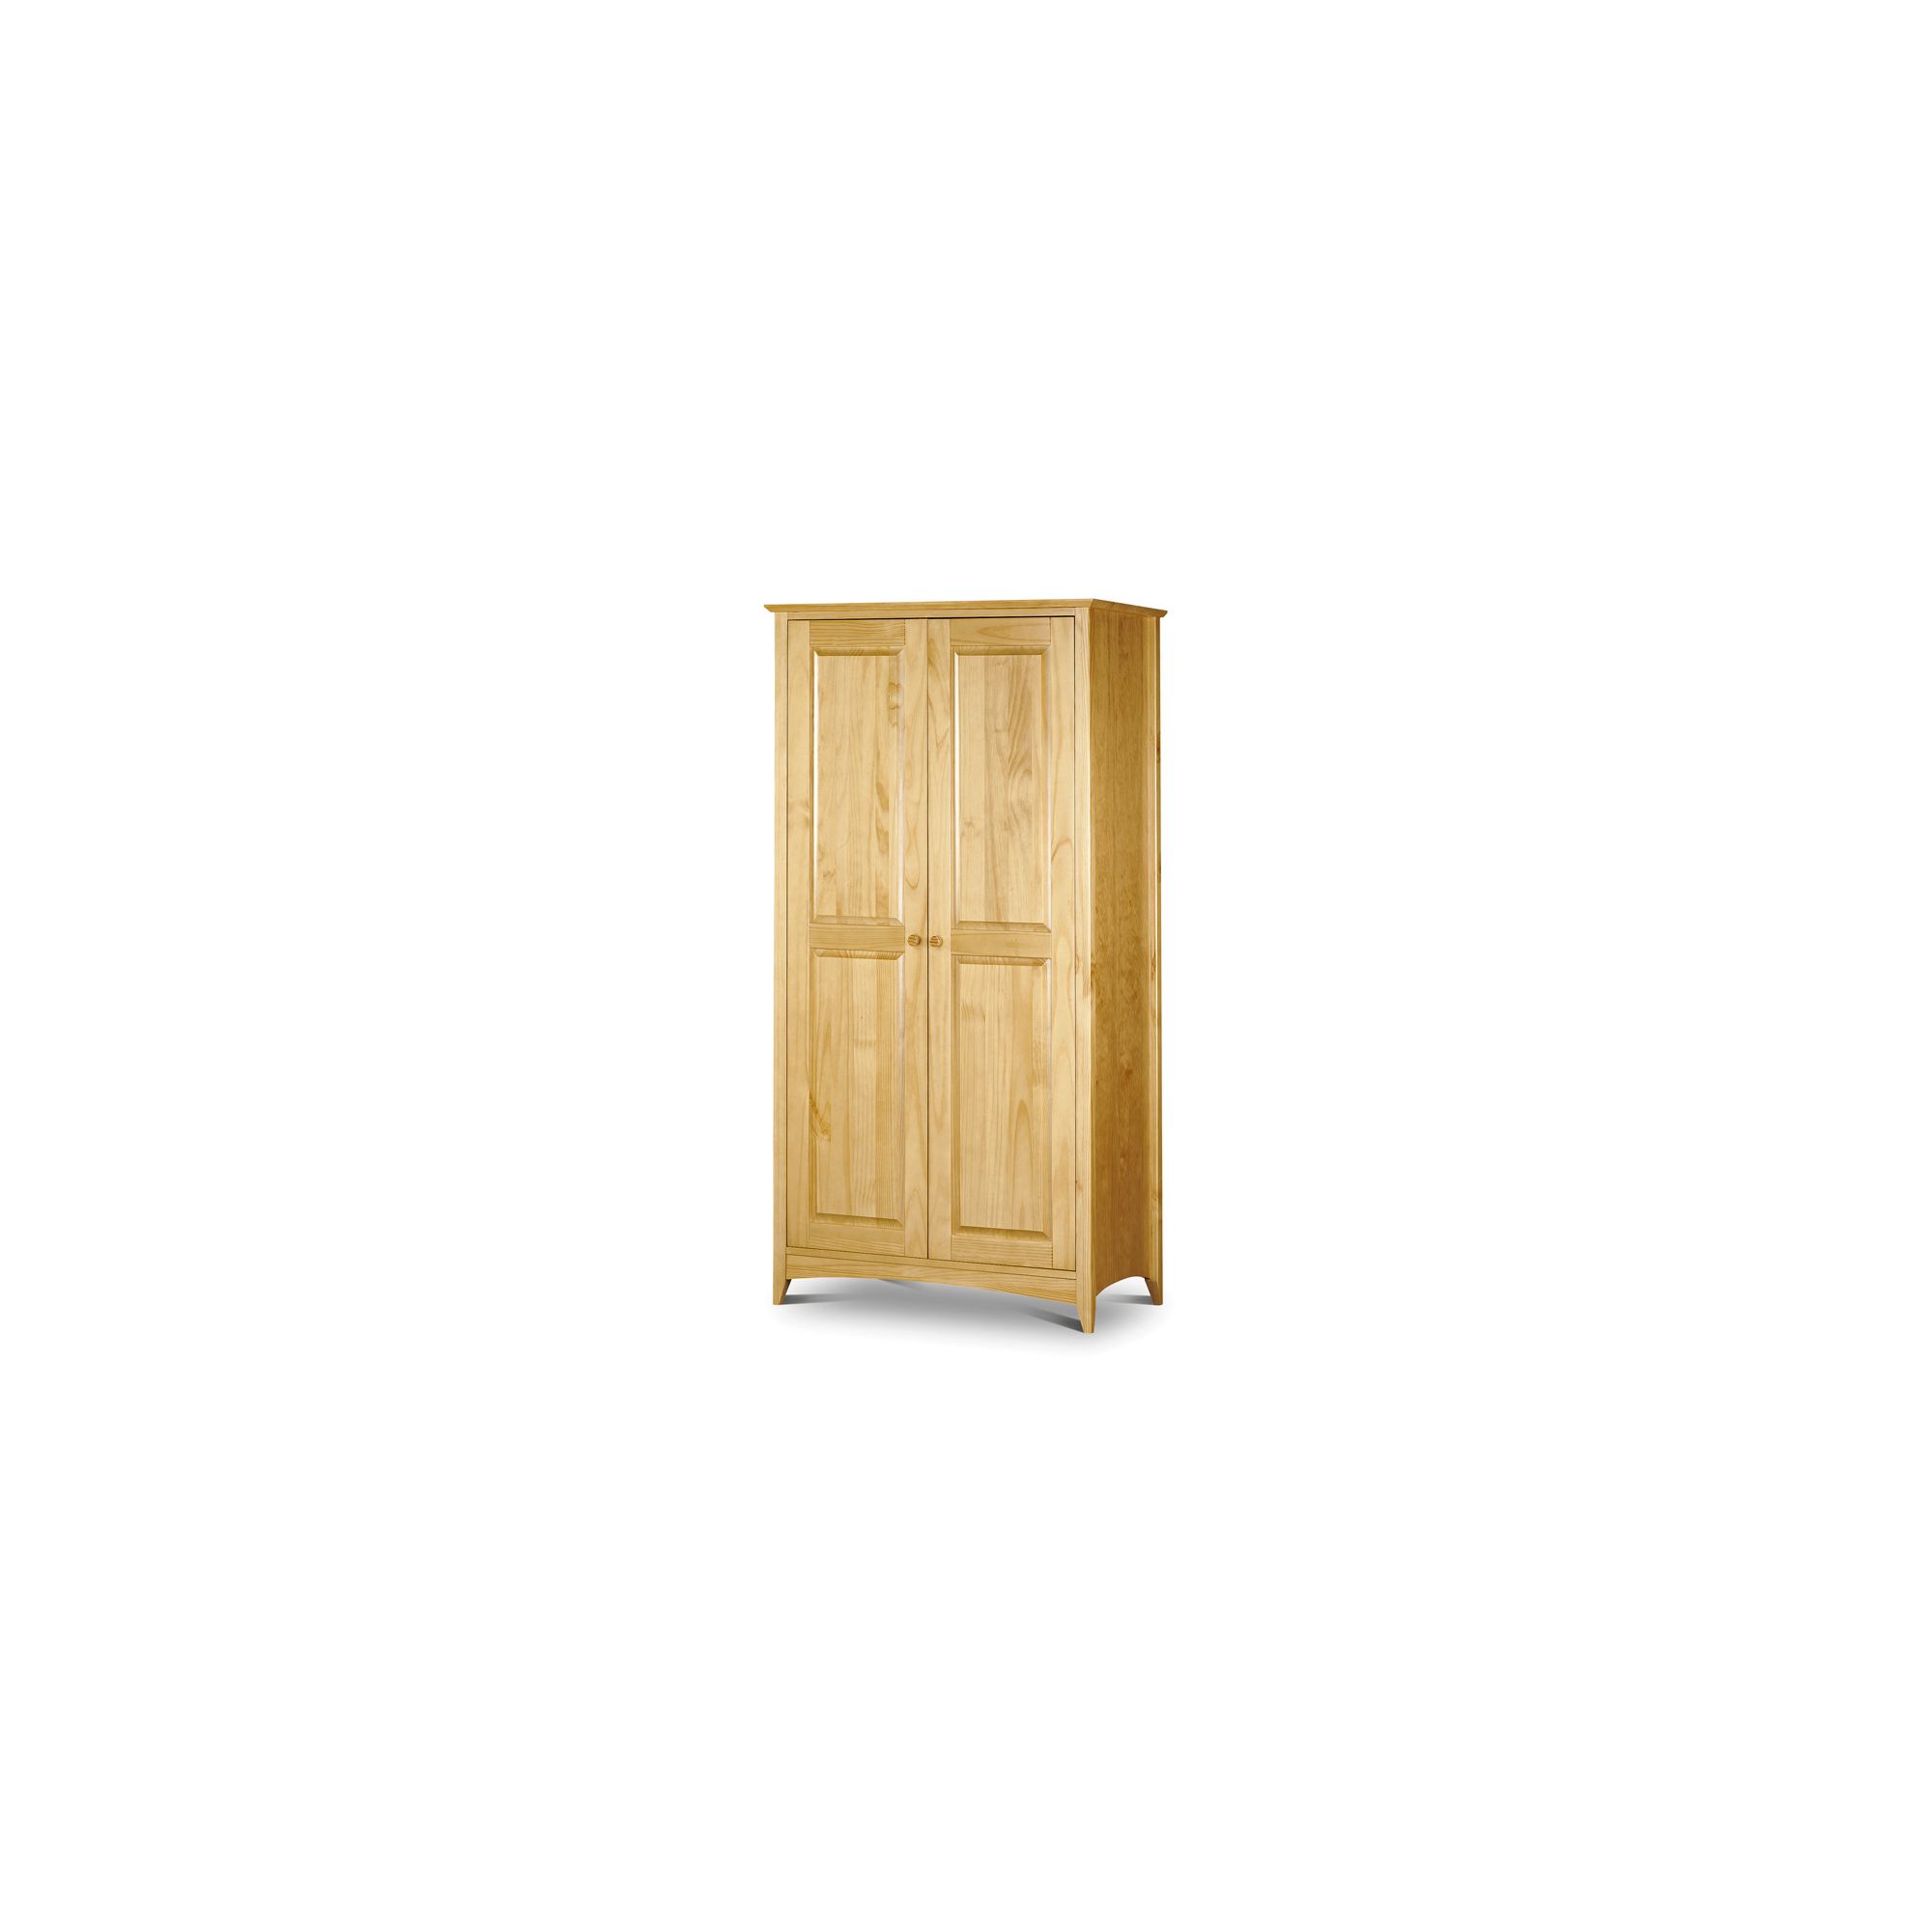 Julian Bowen Kendal 2 Door Wardrobe in Solid Pine at Tesco Direct